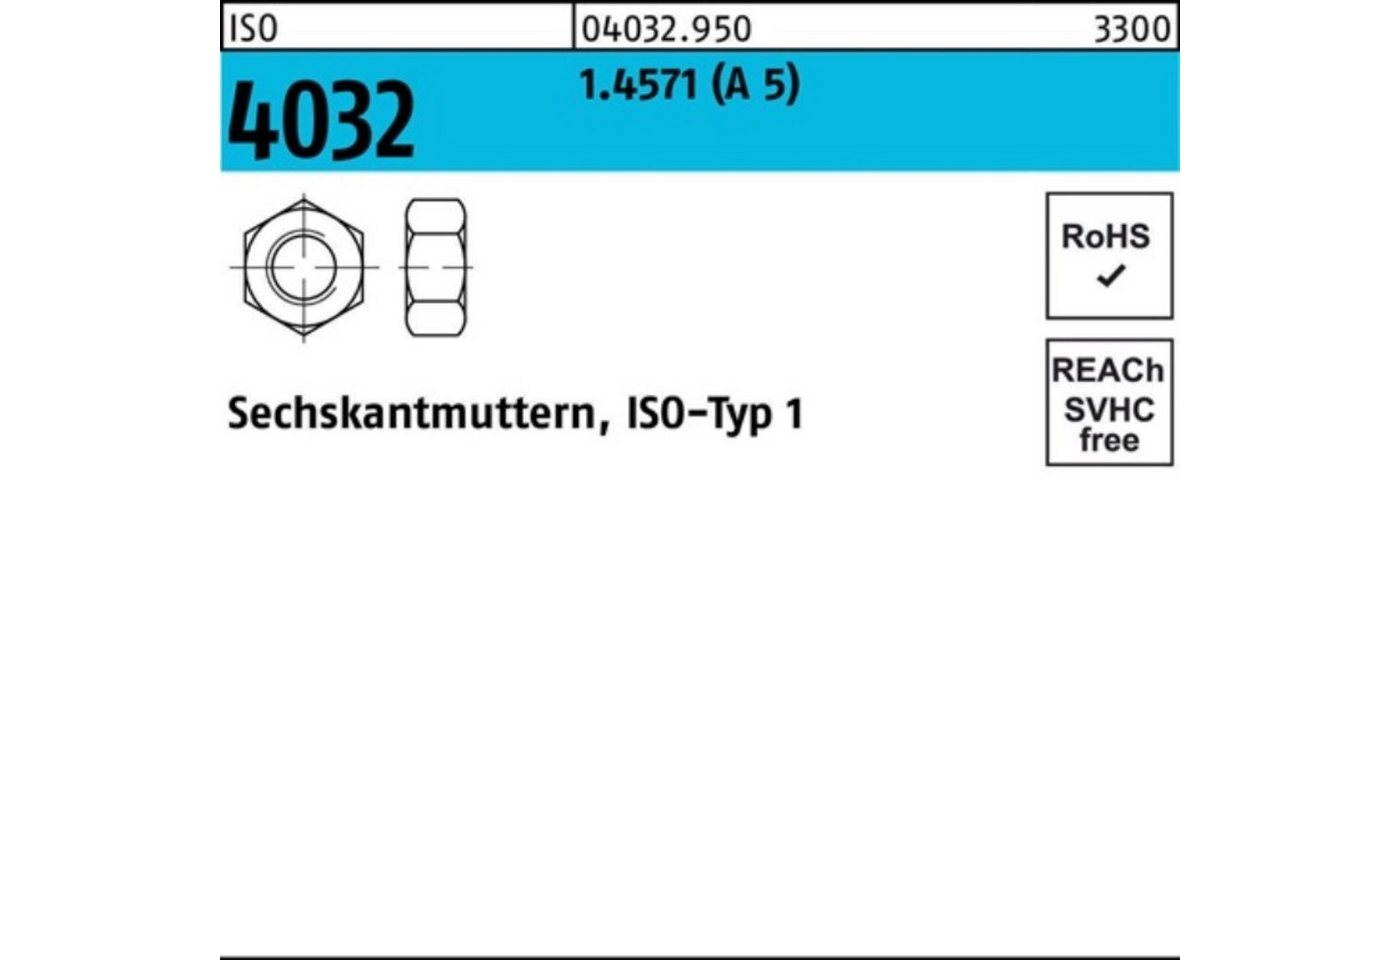 Bufab Muttern 100er Pack Sechskantmutter ISO 4032 M10 A 5 100 Stück ISO 4032 1.4571 von Bufab